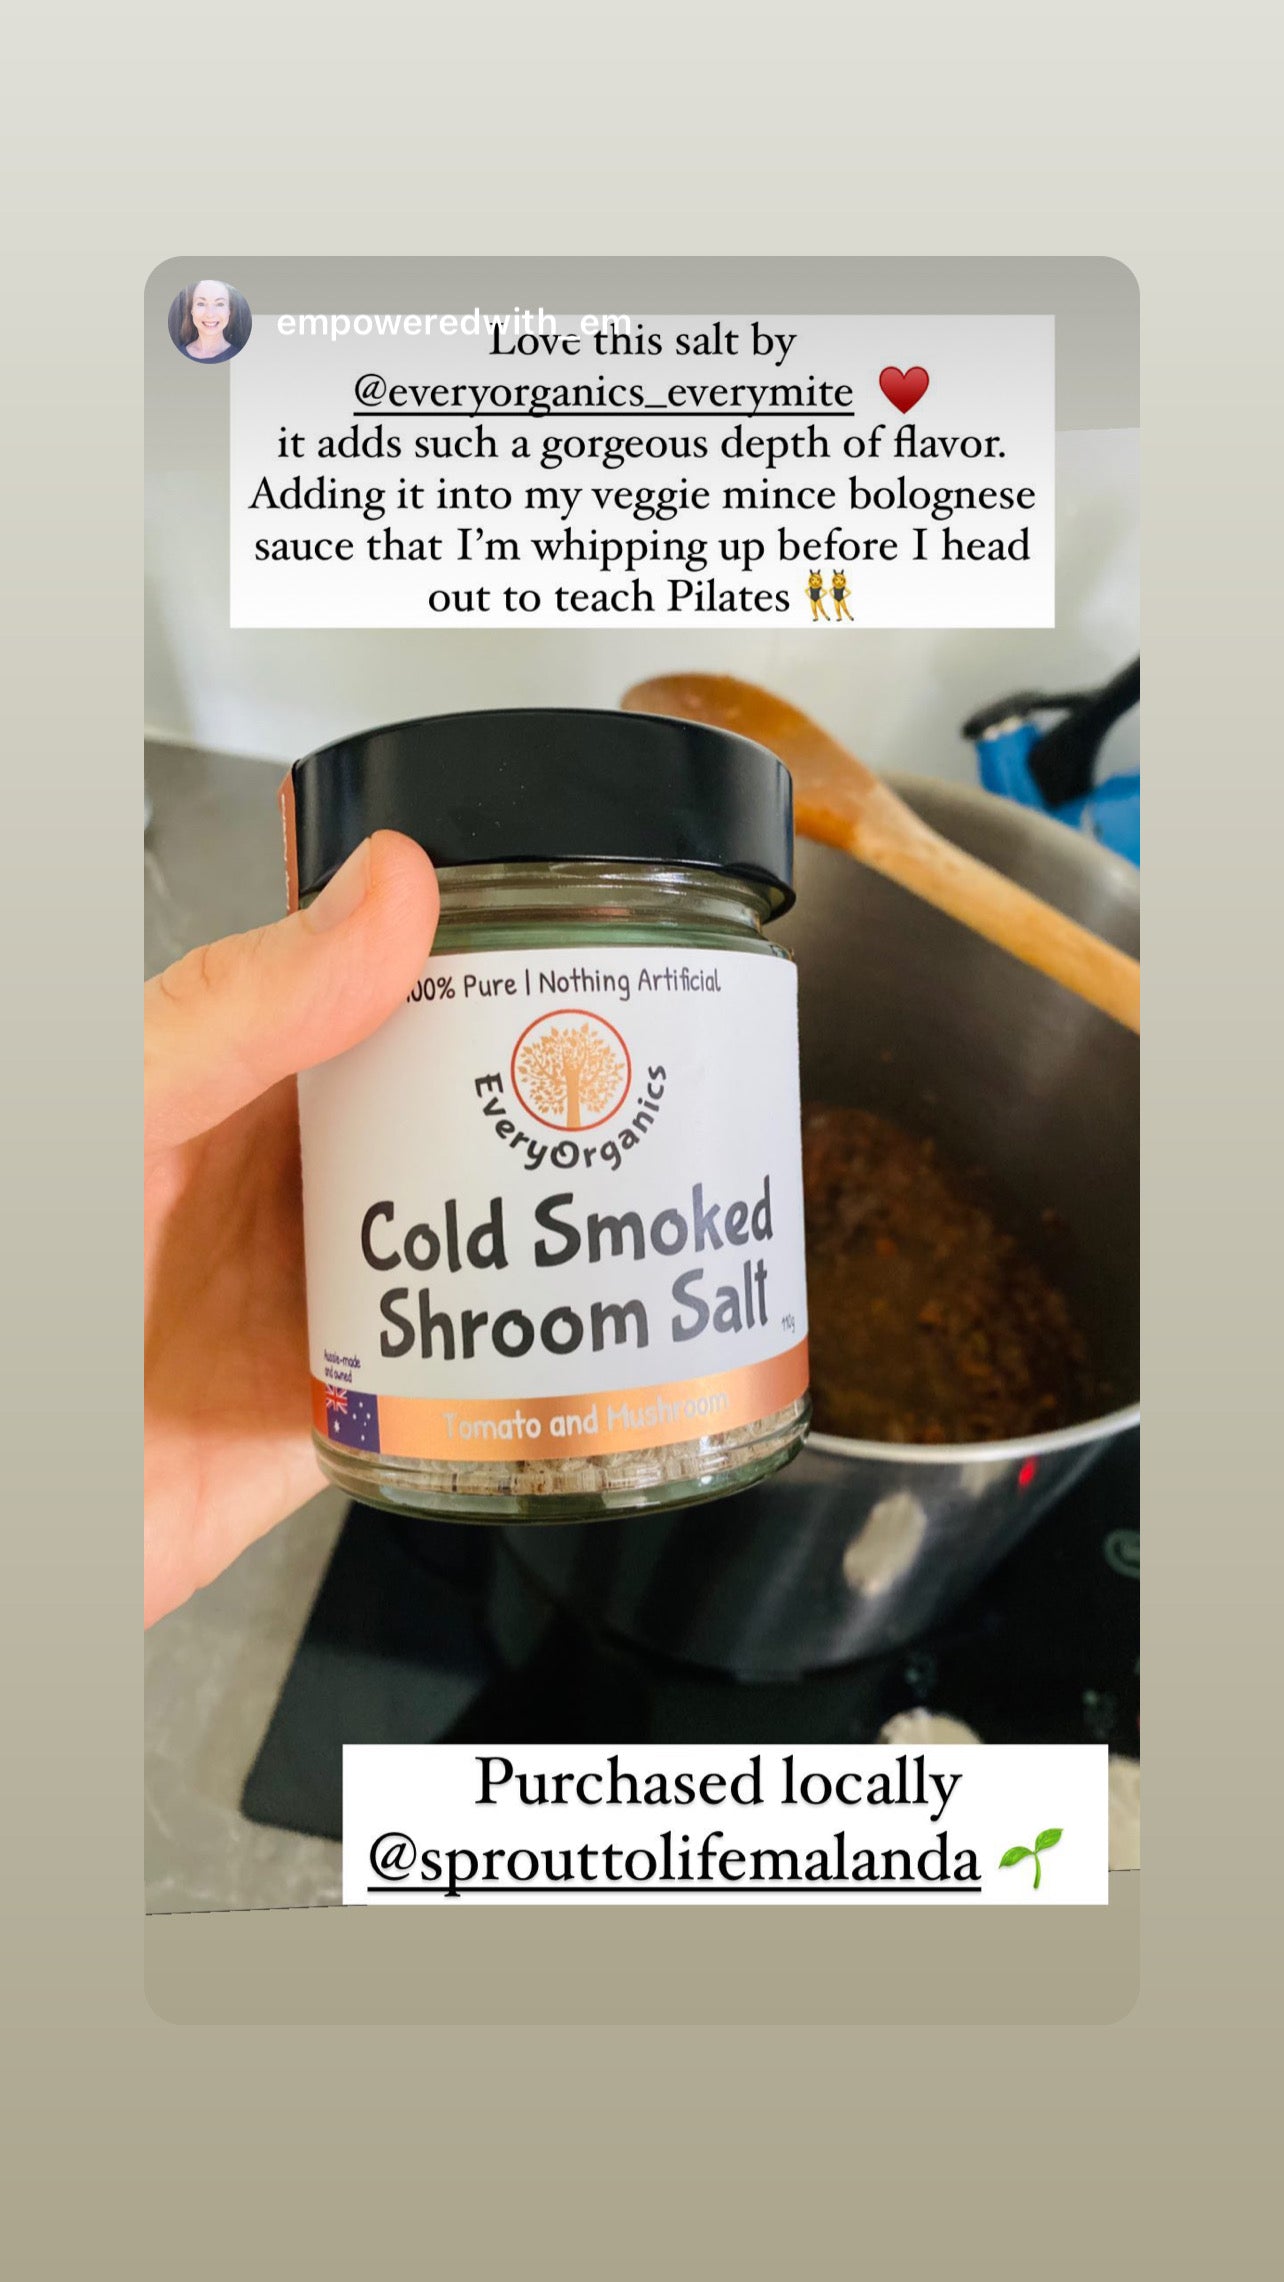 Cold Smoked Shroom Salt 110g x 1